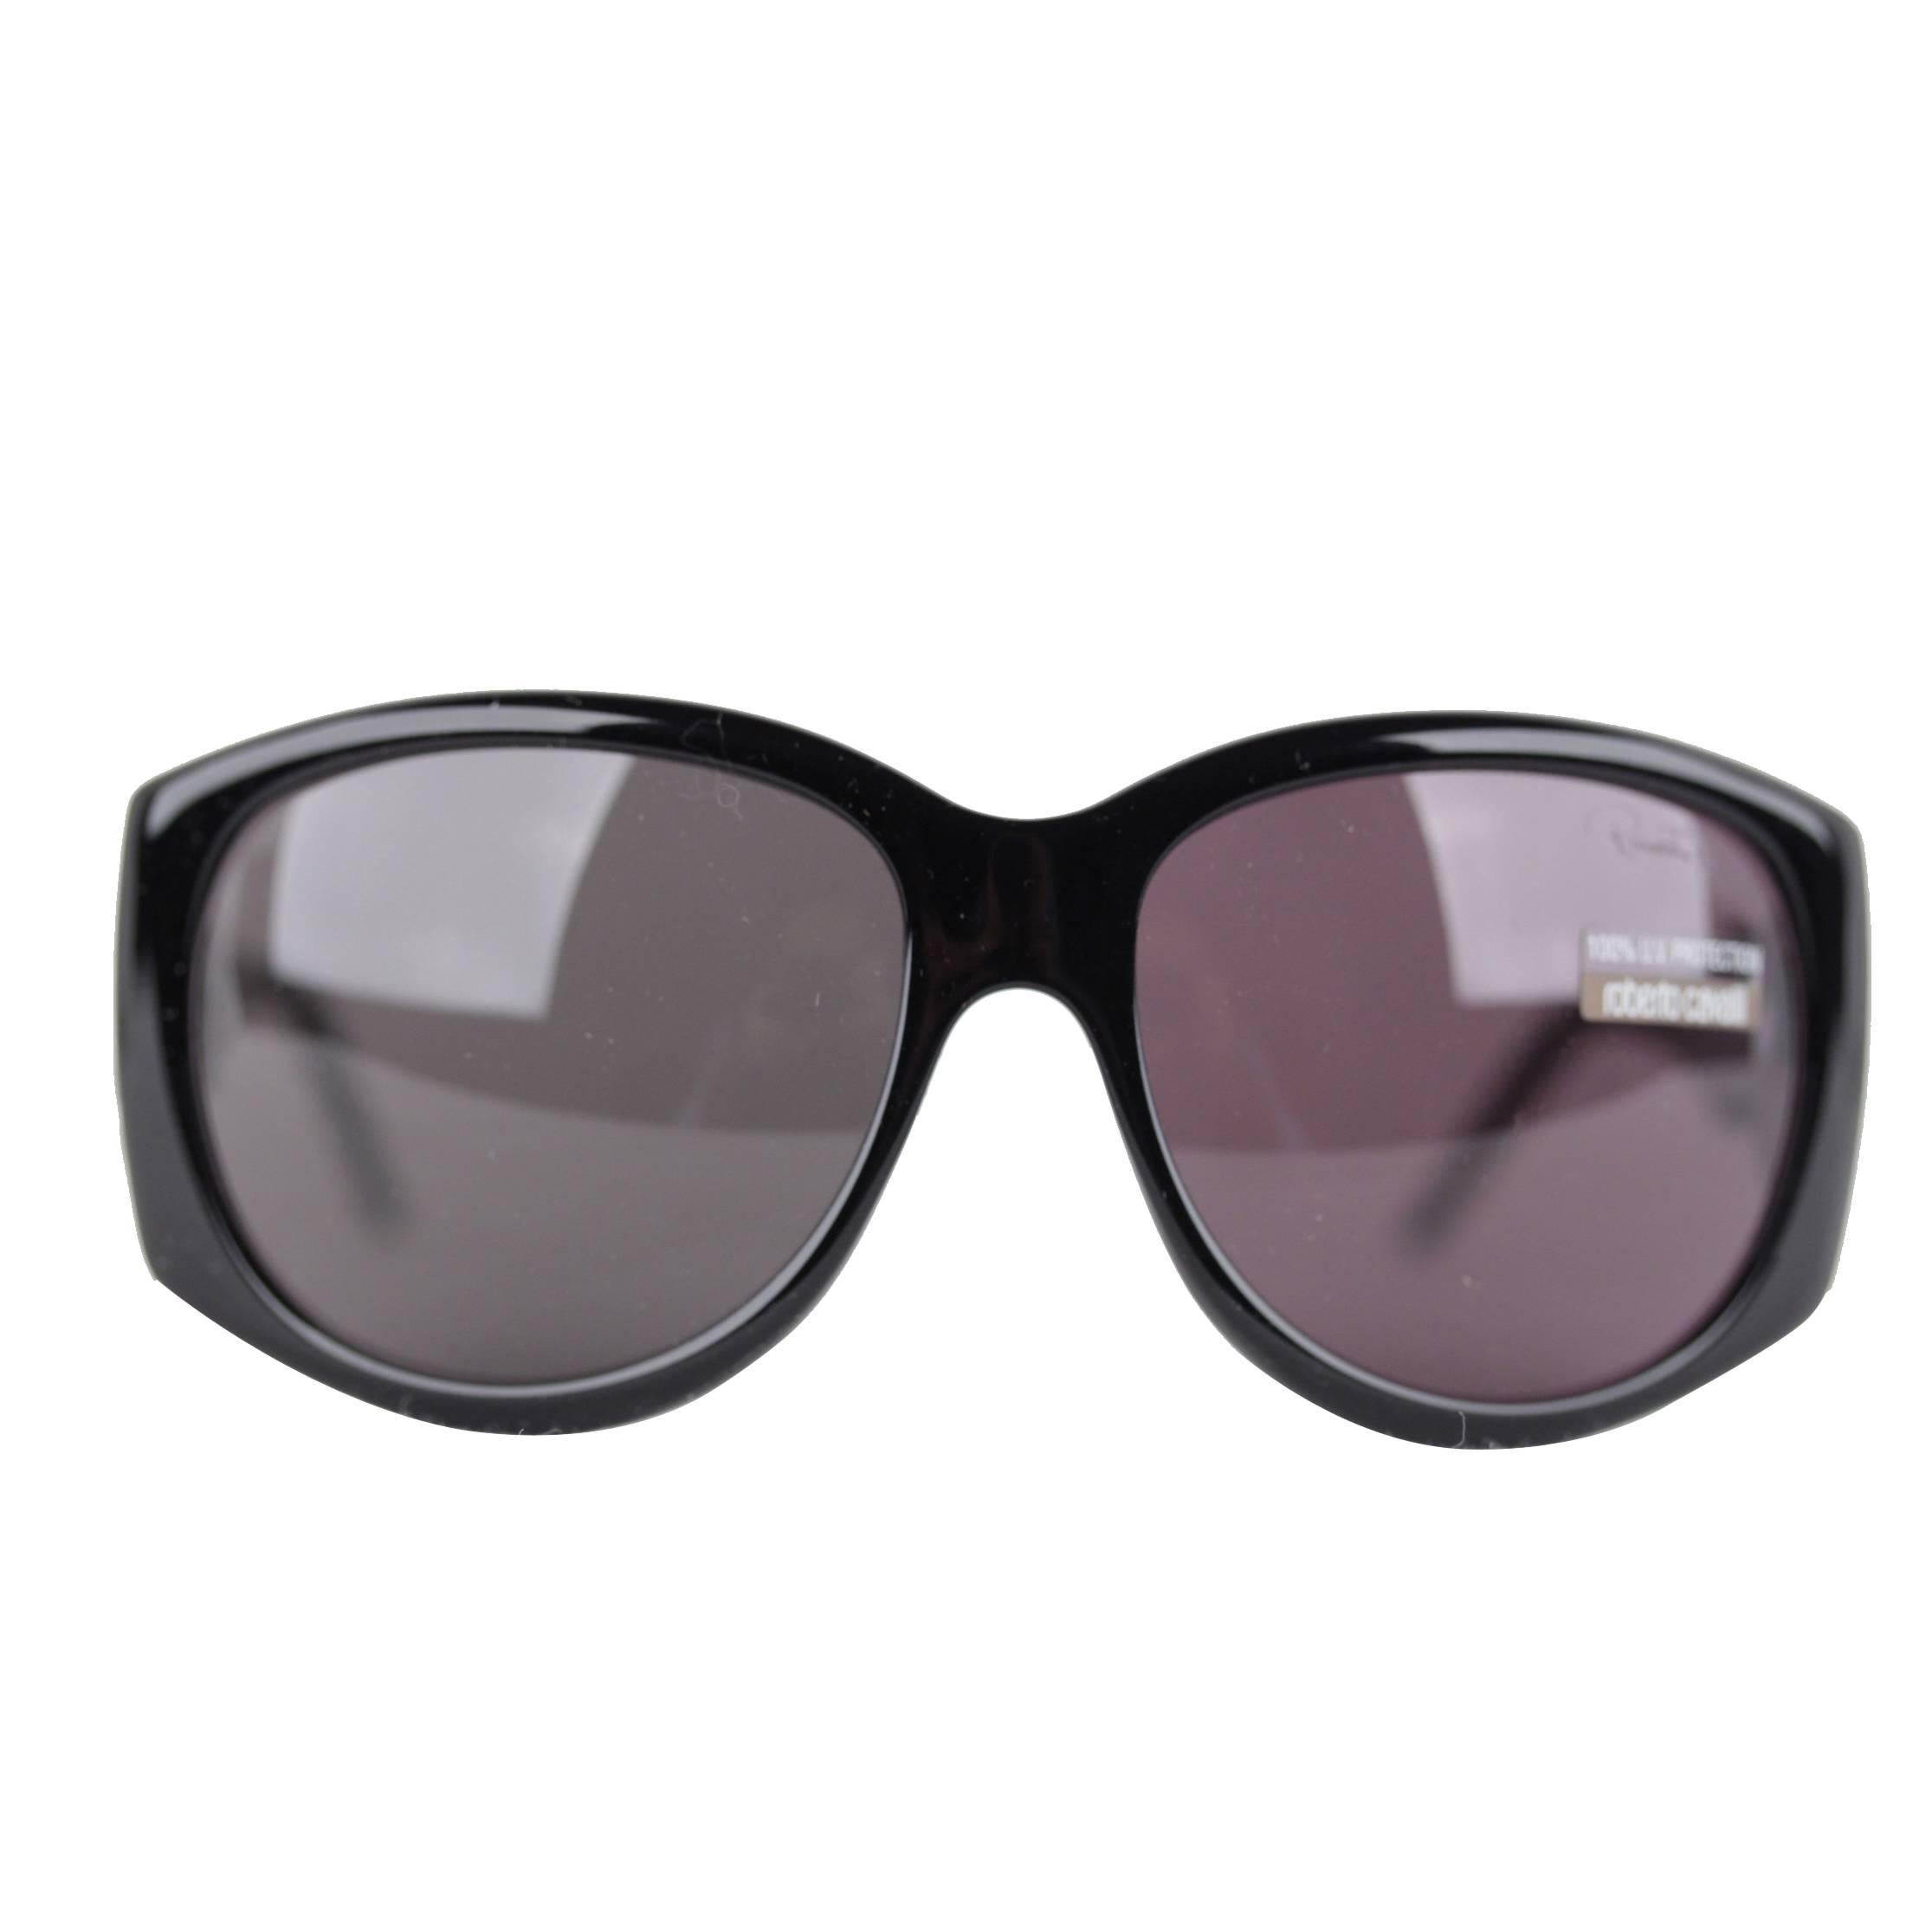 ROBERTO CAVALLI black/gray sunglasses mod. CARITE 288S B5 59/15 130 eyewear